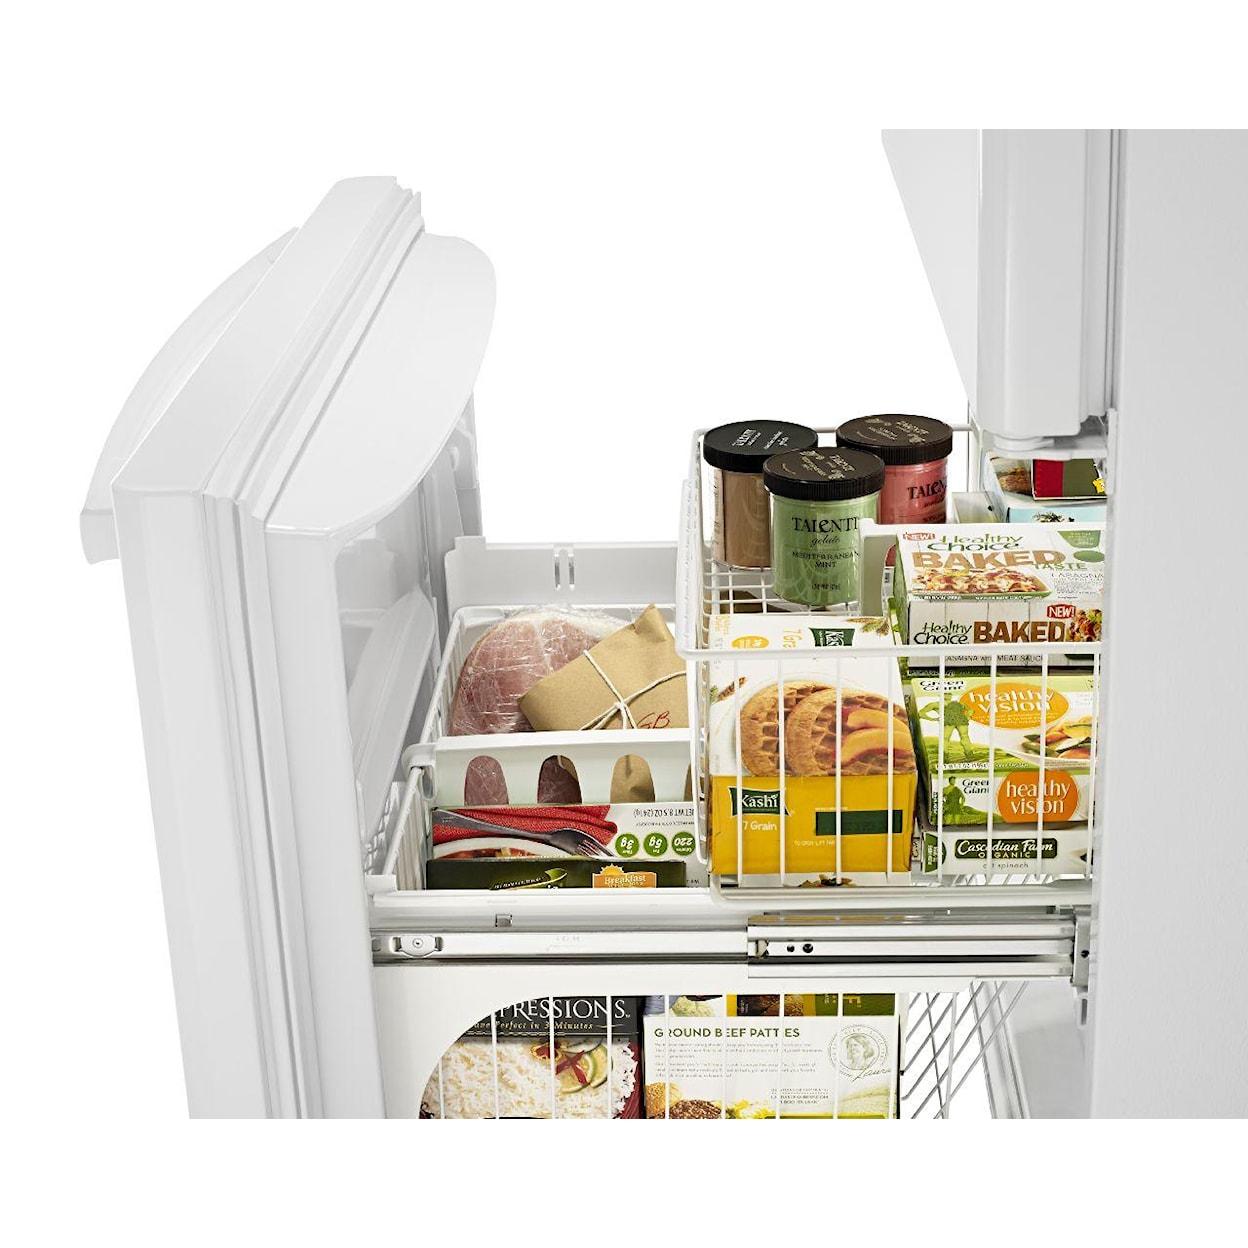 Amana Bottom Mount Refrigerators 22 Cu. Ft. Bottom-Freezer Refrigerator